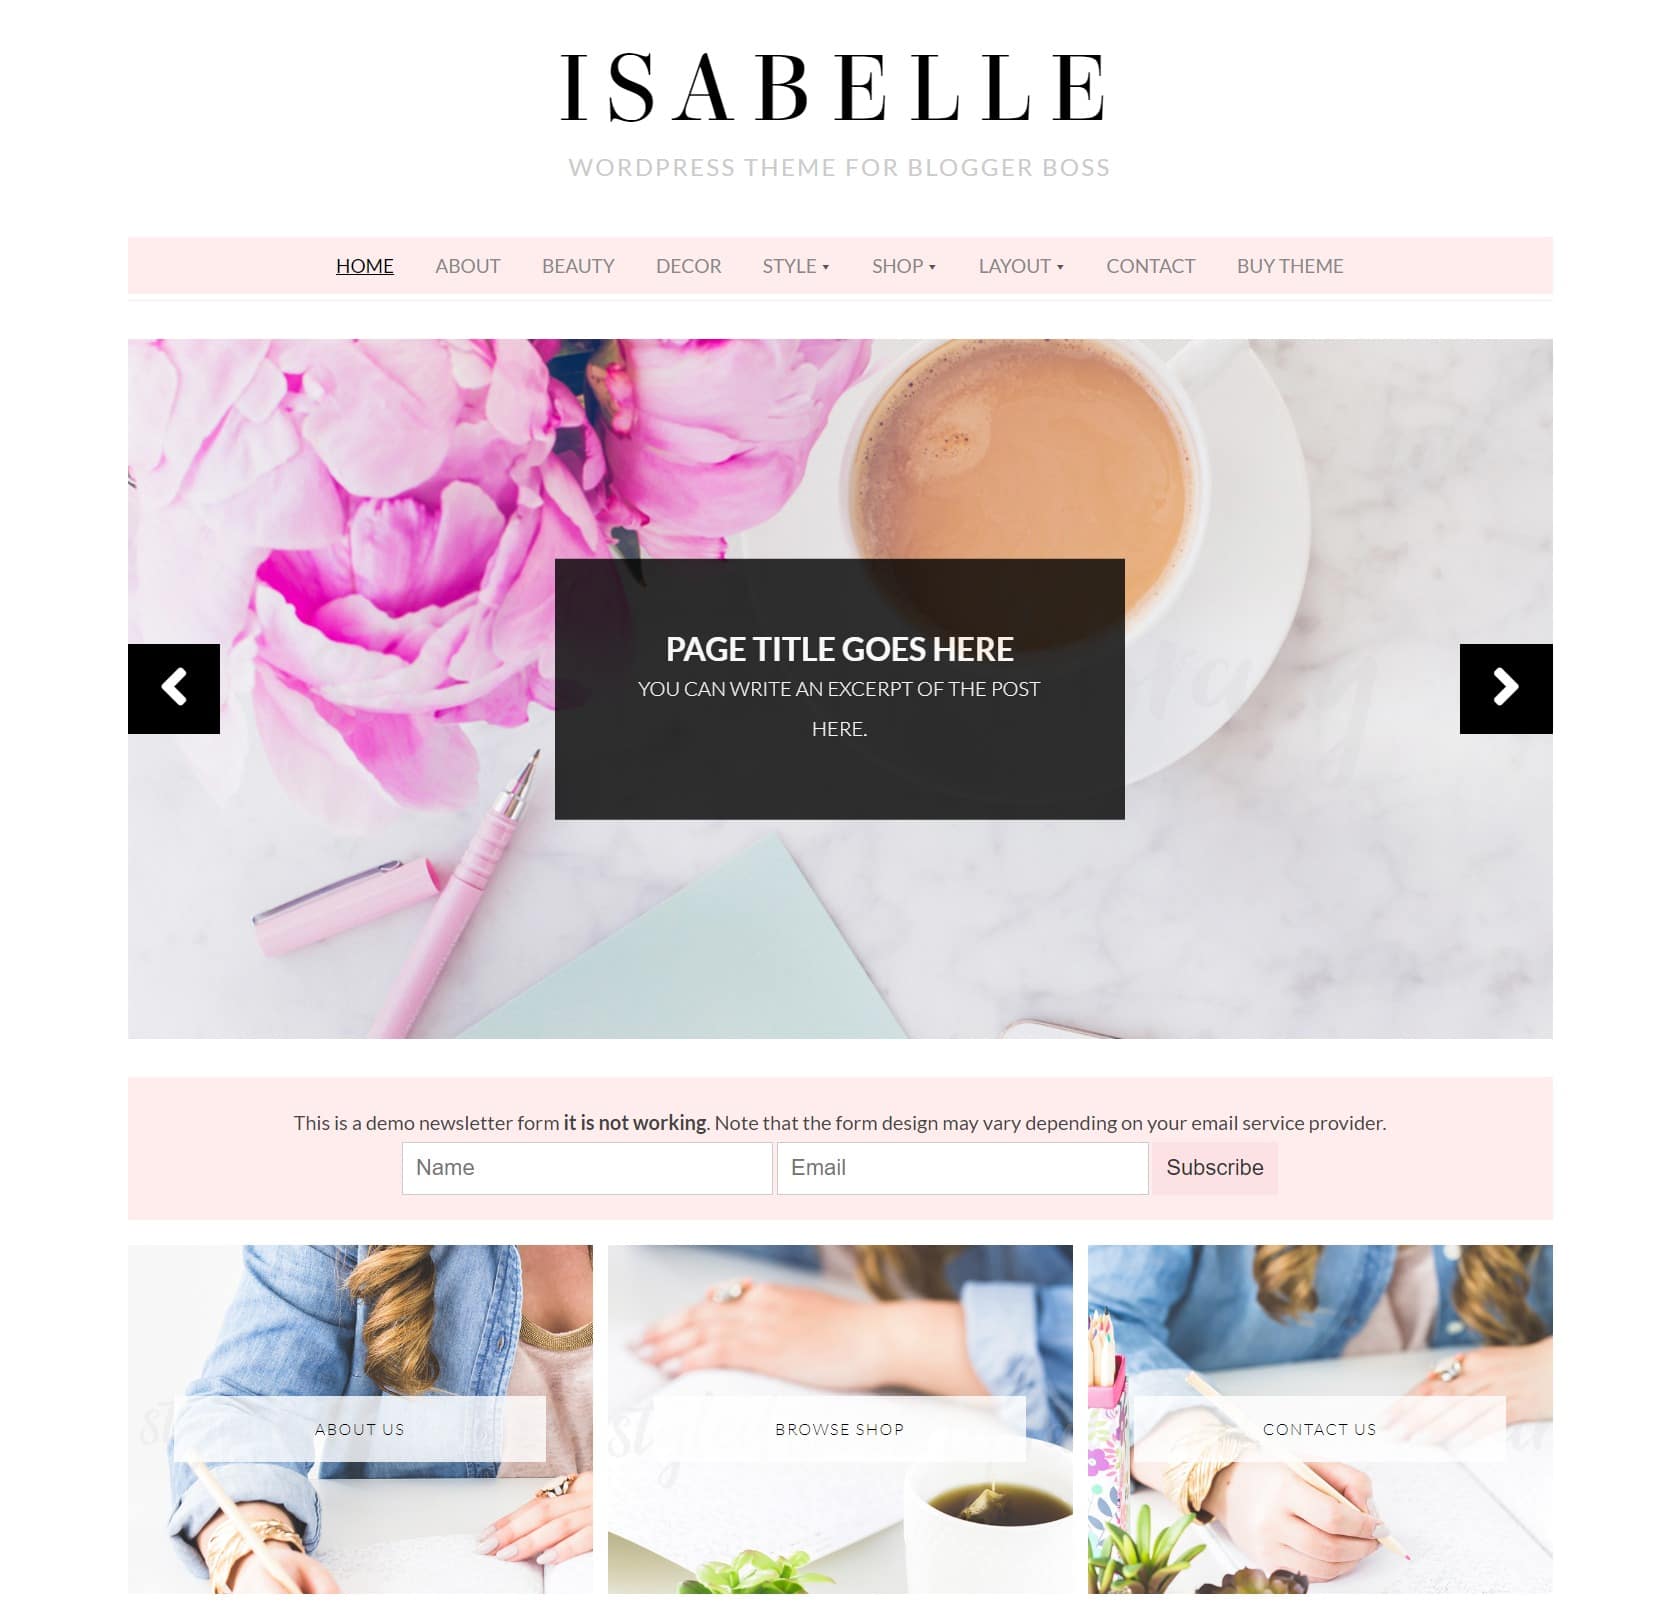 Isabelle – WordPress Theme for lifestyle Blogger Boss